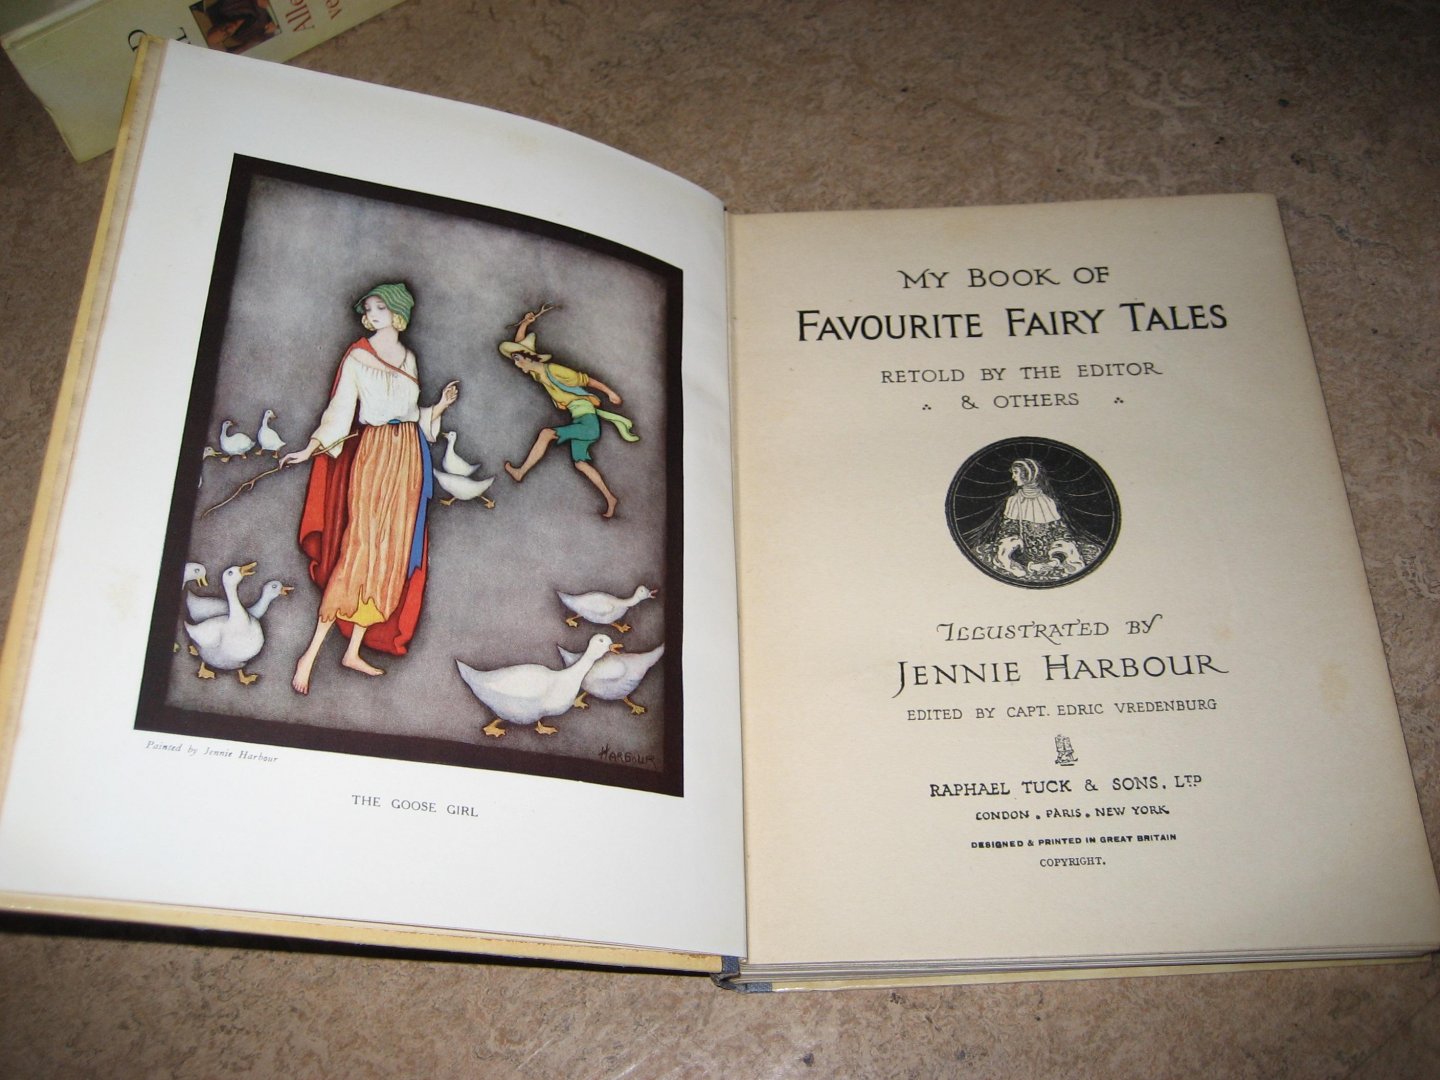 Harbour, Jennie (illustrator) | Edited by Capt. Edric Vredenburg - My Book of Favourite Fairy Tales